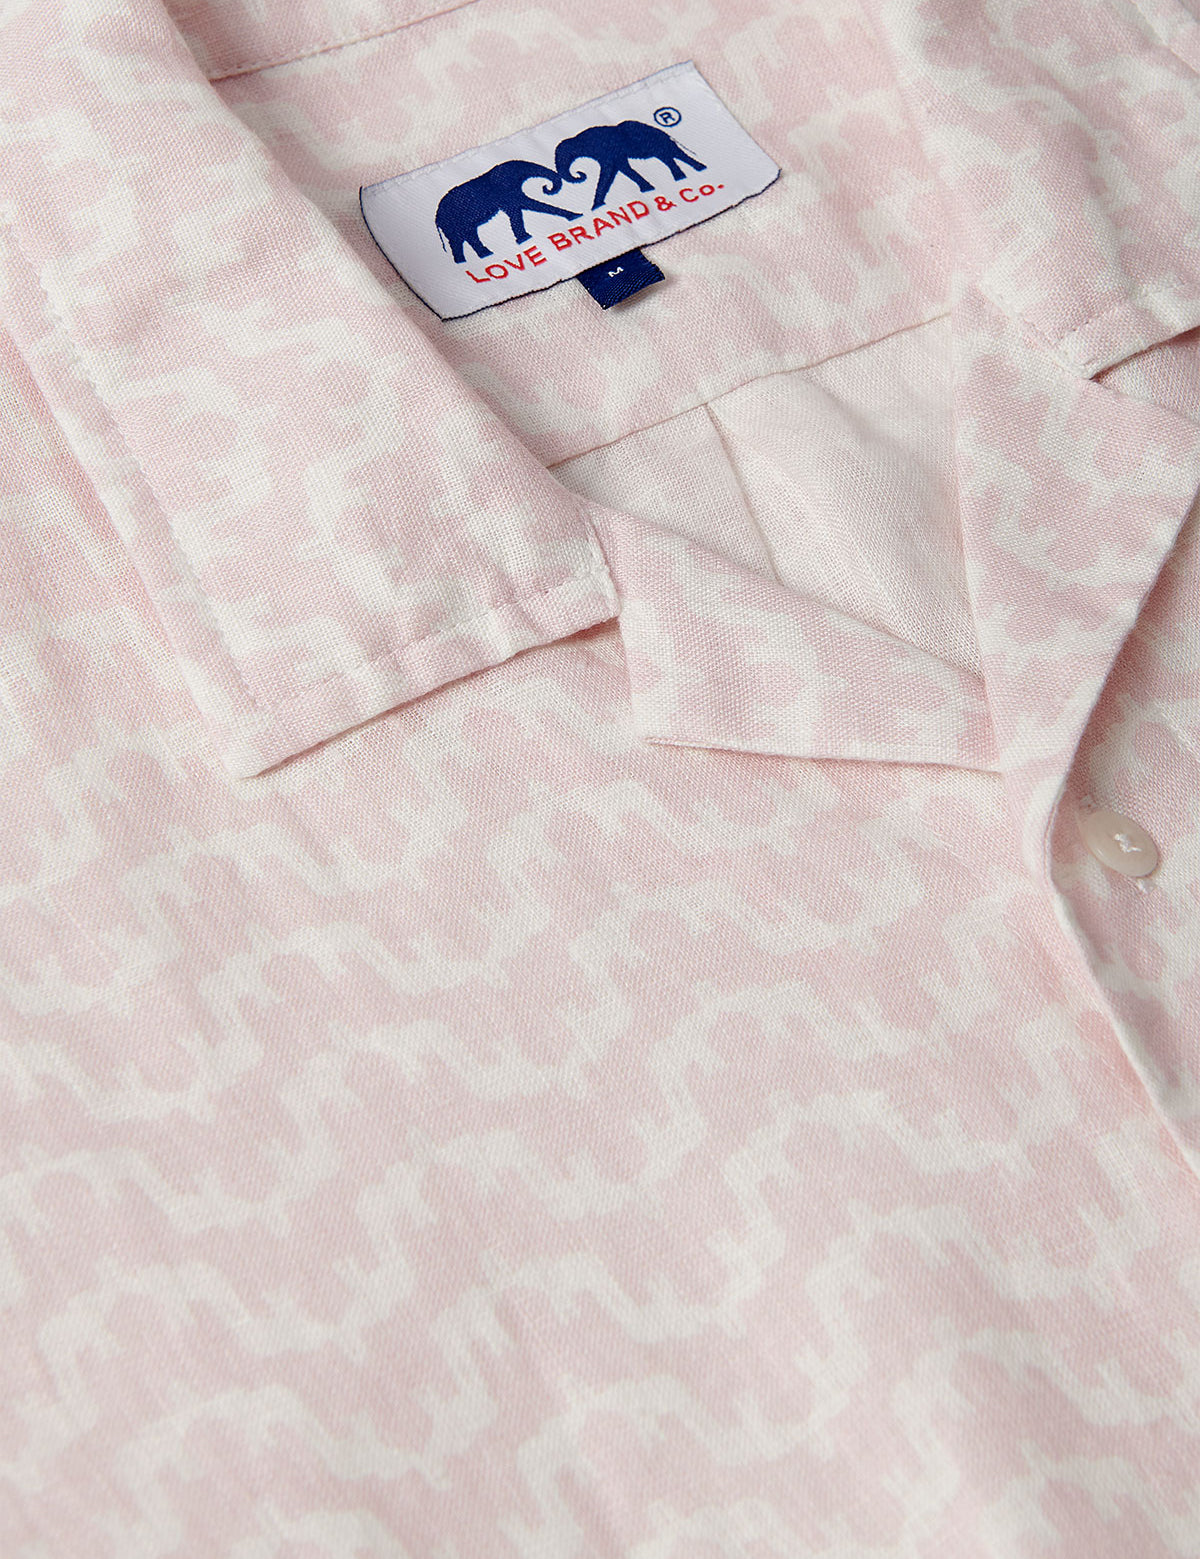 Elephant Palace Pink Arawak mens linen shirt 